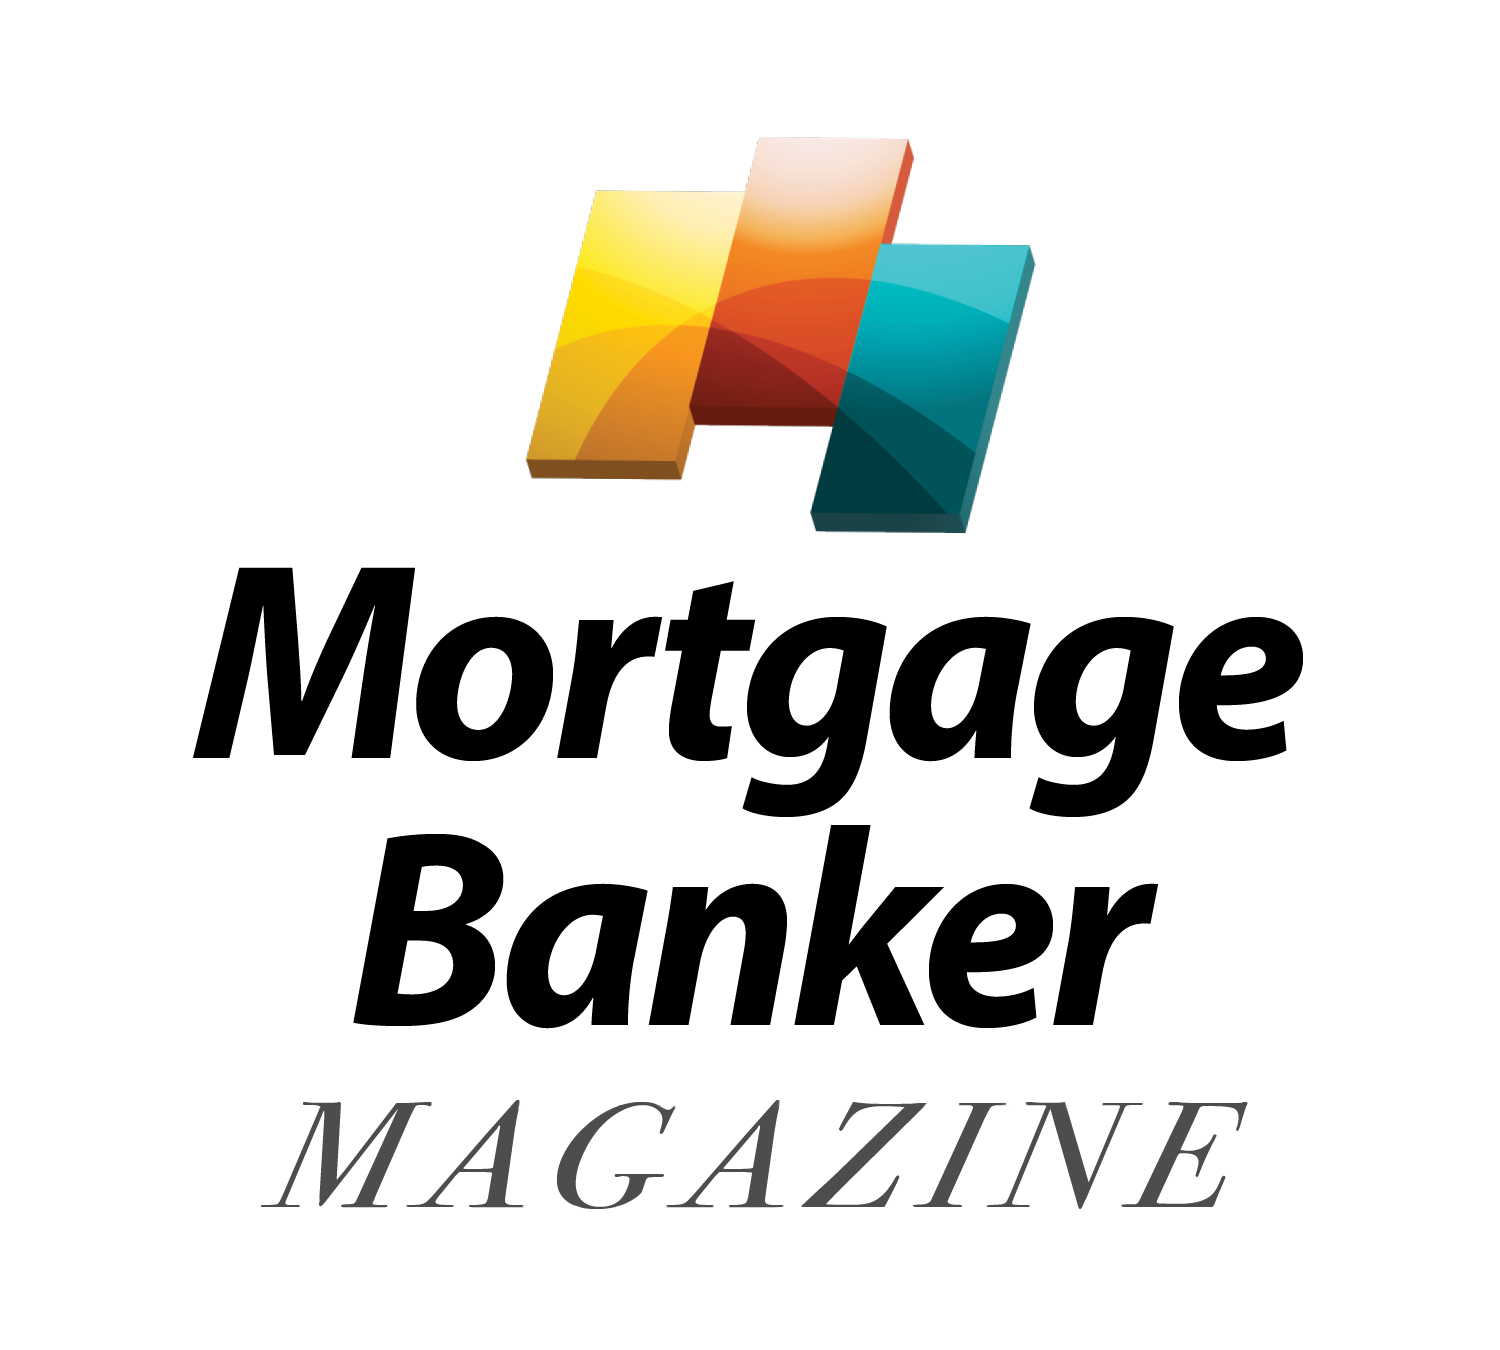 Mortgage Banker Magazine logo